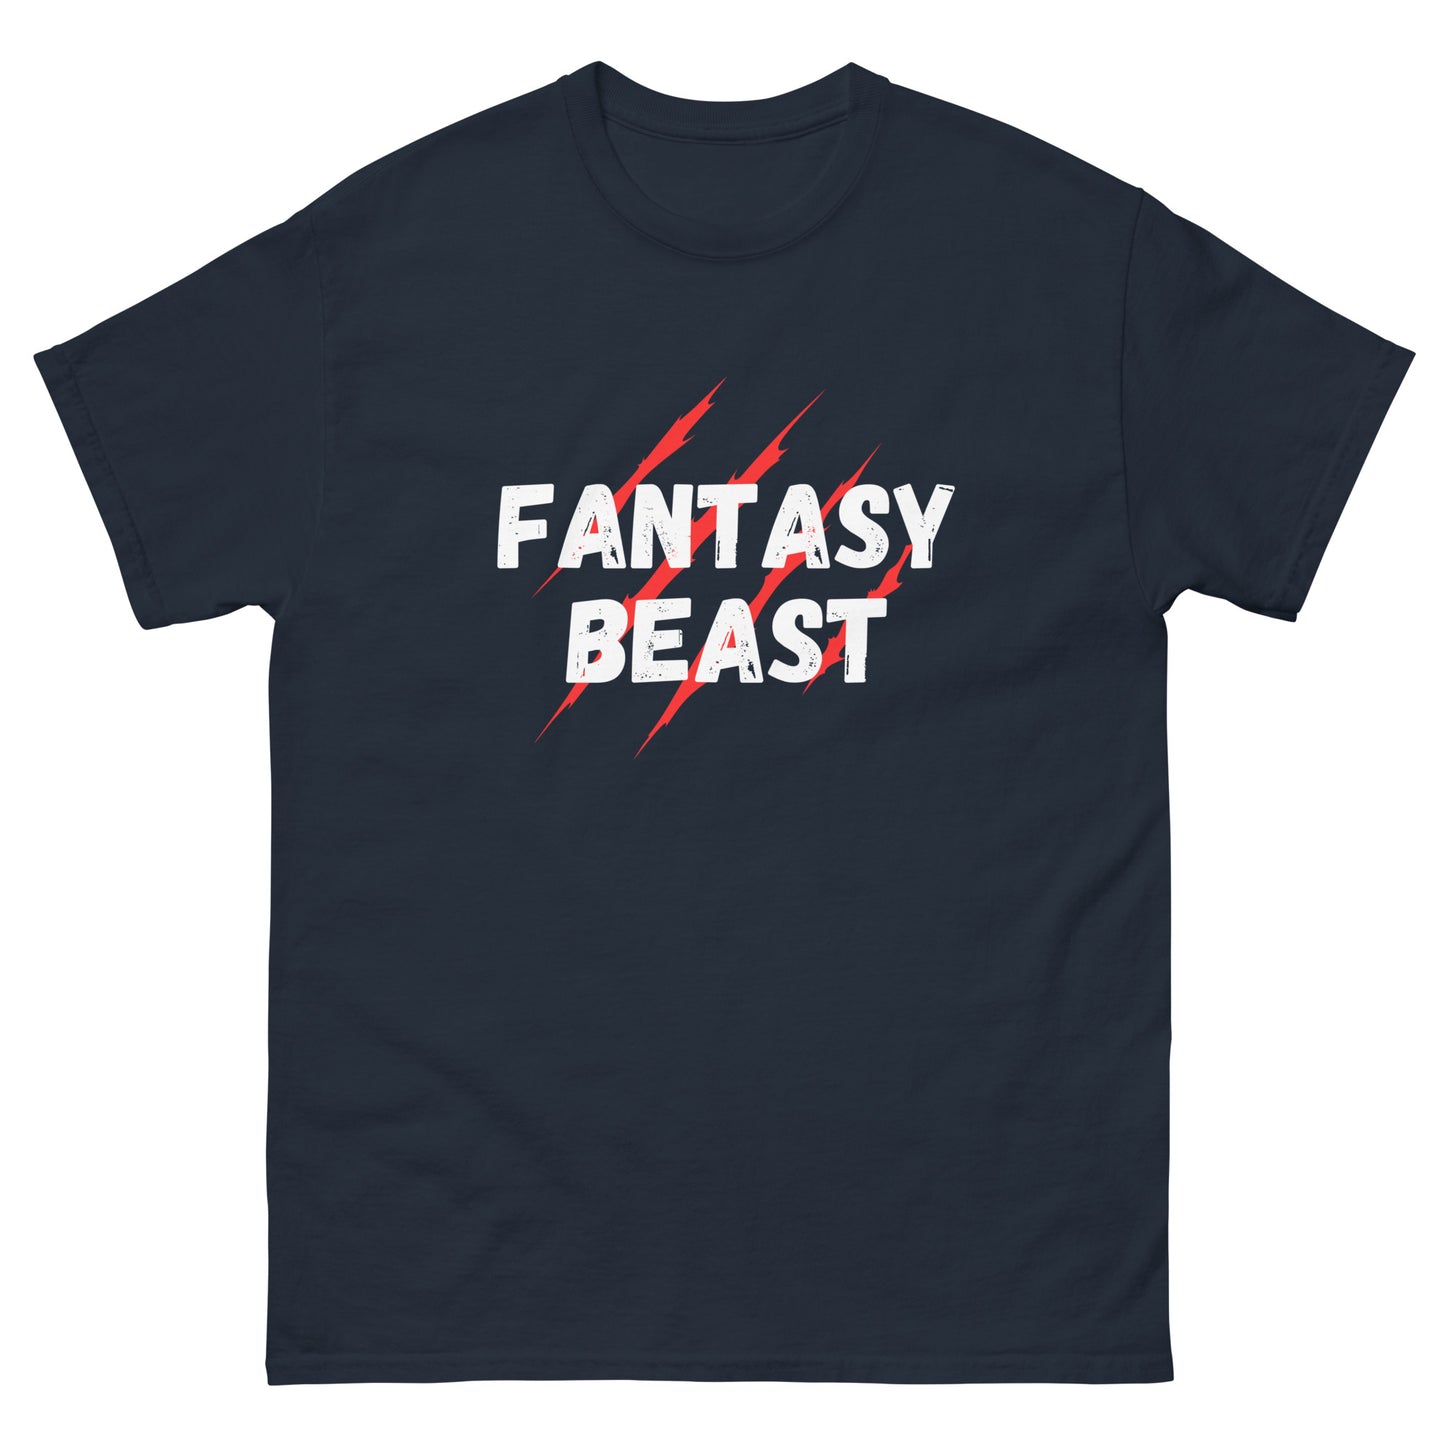 Fantasy Beast - Men's classic tee